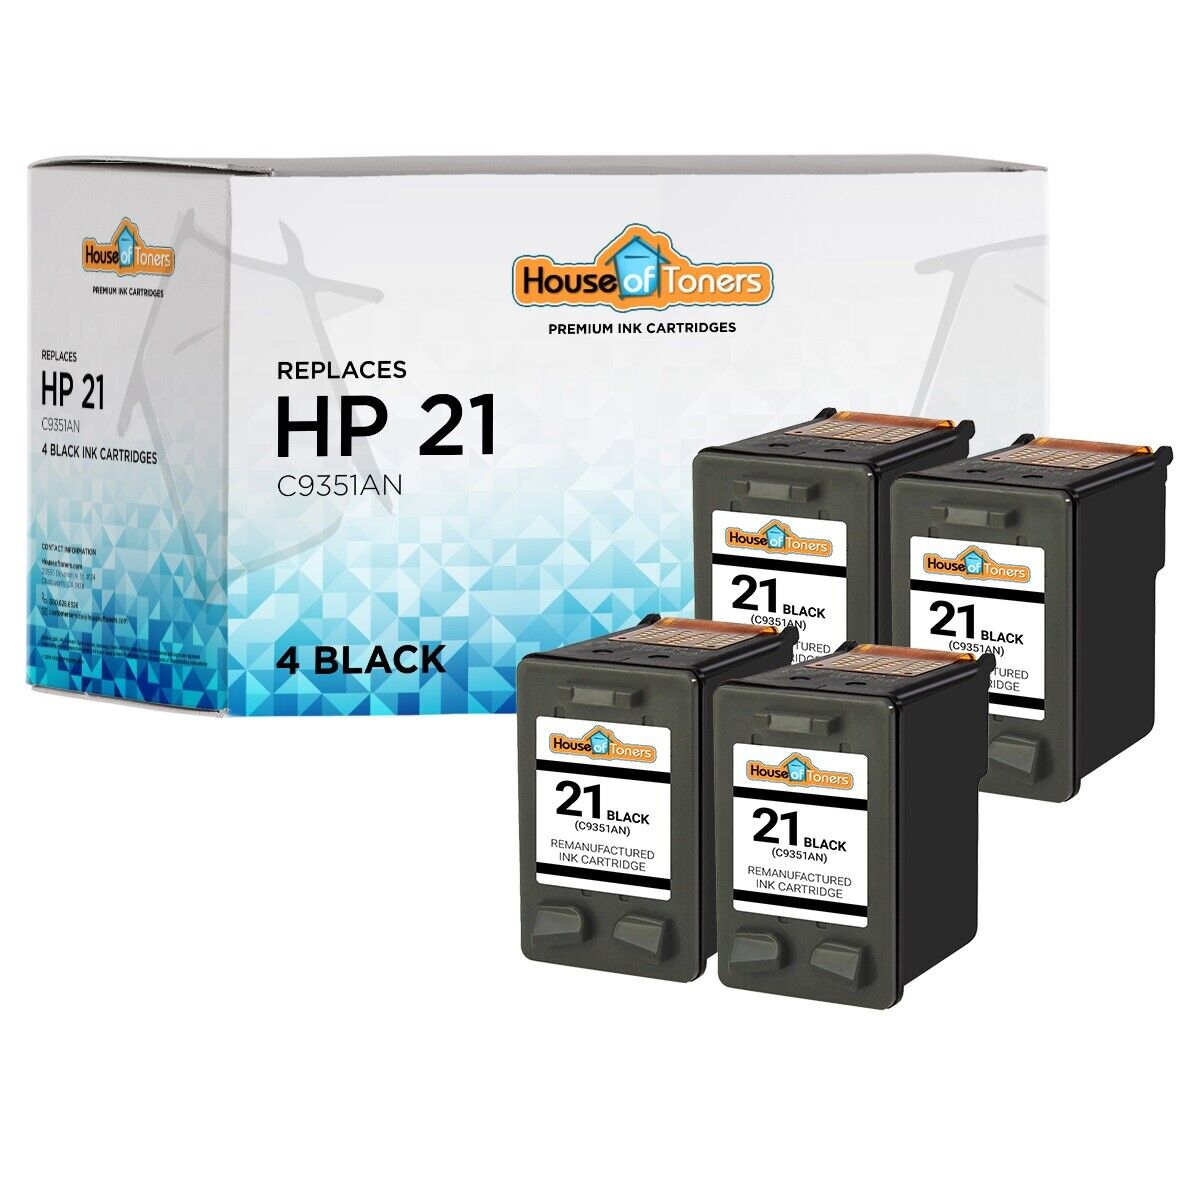 4 PACK for HP 21 Black Ink Cartridges for Deskjet Officejet FAX PSC Series